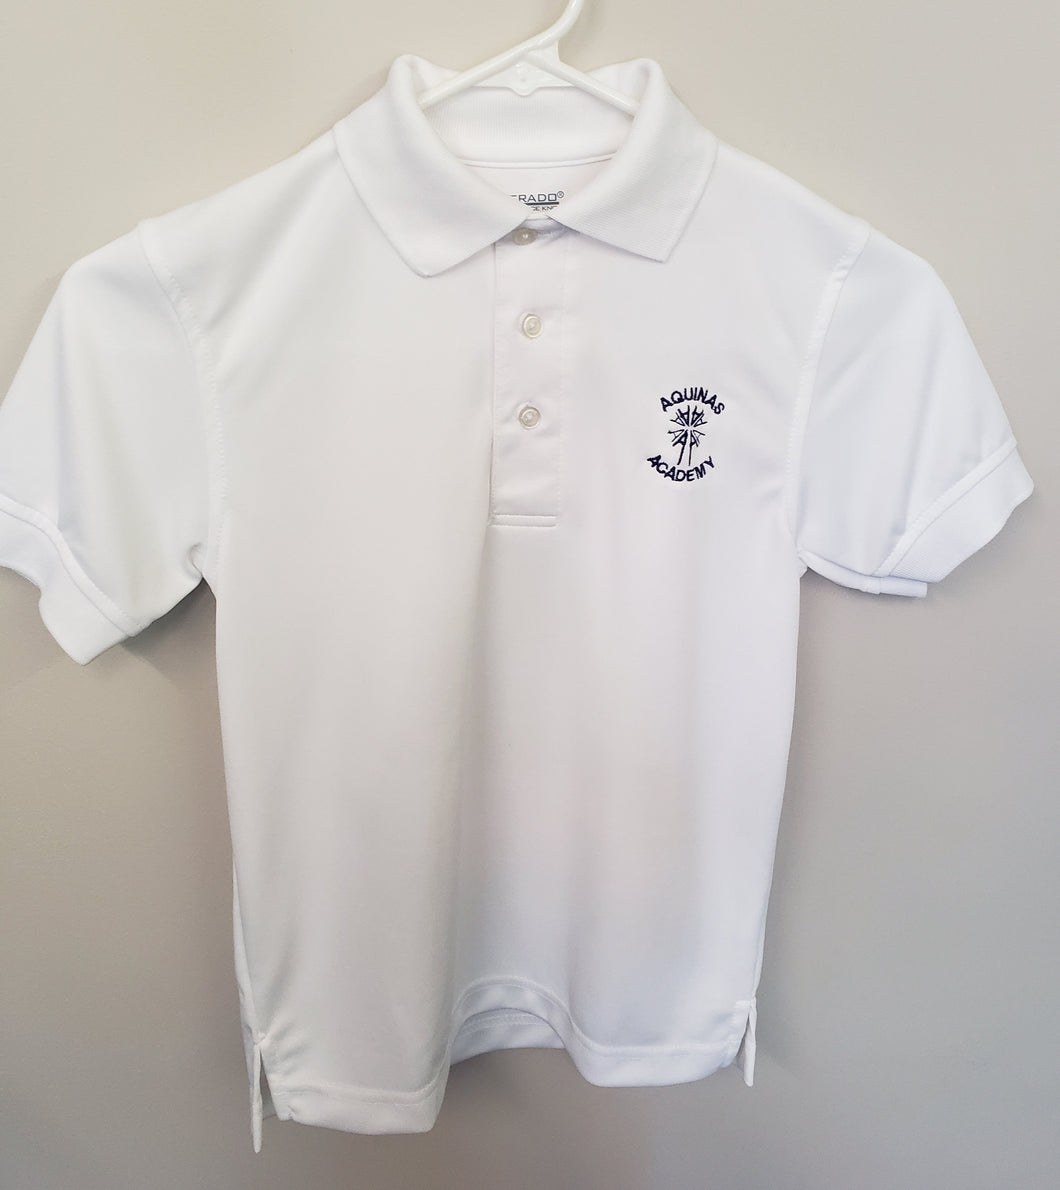 AA008 Aquinas Academy - Short Sleeve Unisex Polyester Wicking Polo - White - Adult Sizes